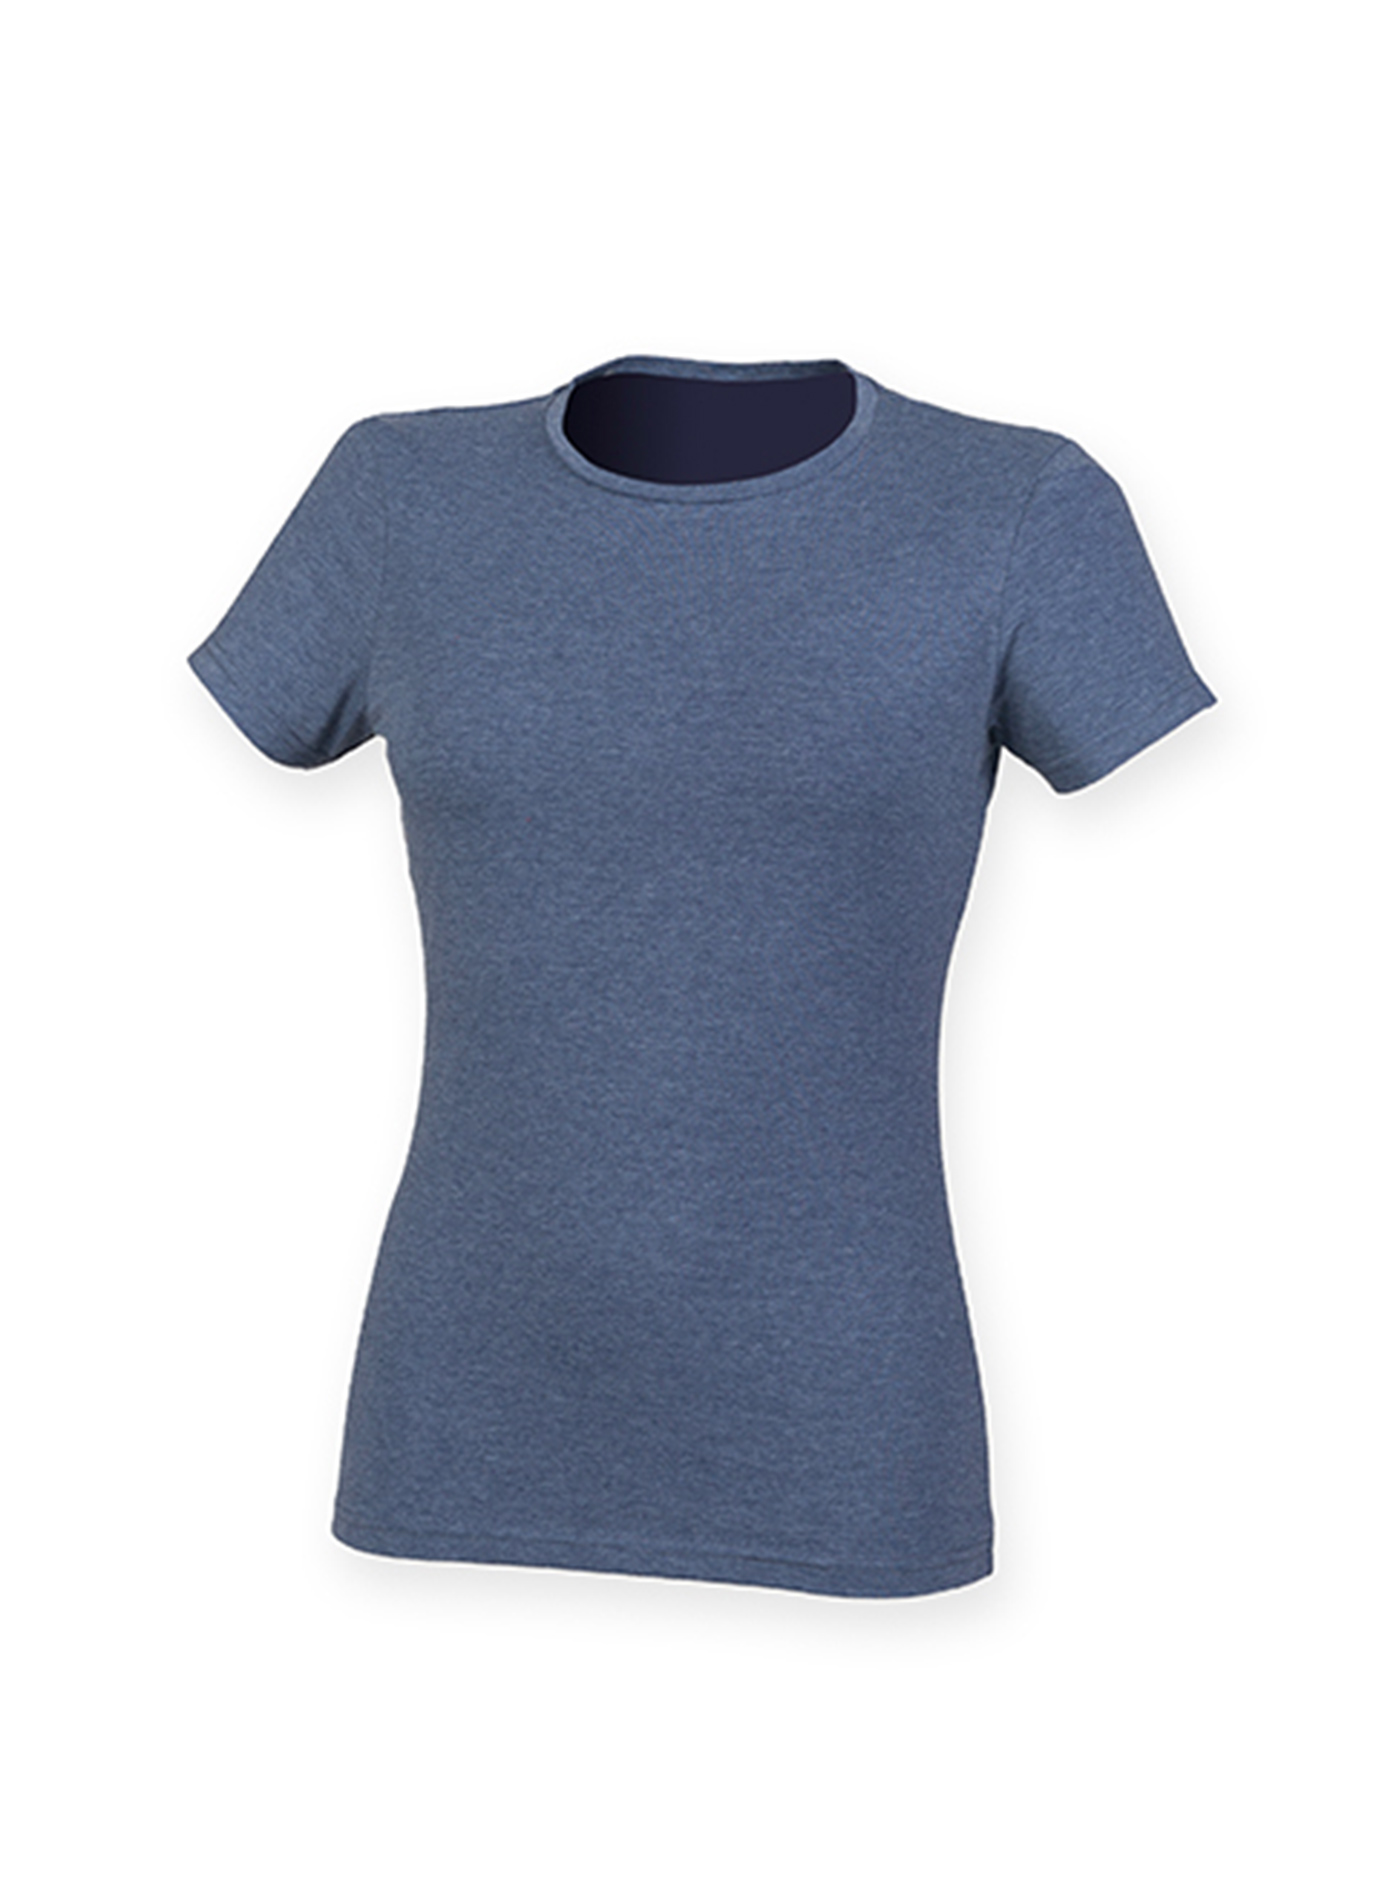 Dámské strečové tričko Skinnifit Feels Good - Tmavě modrá L